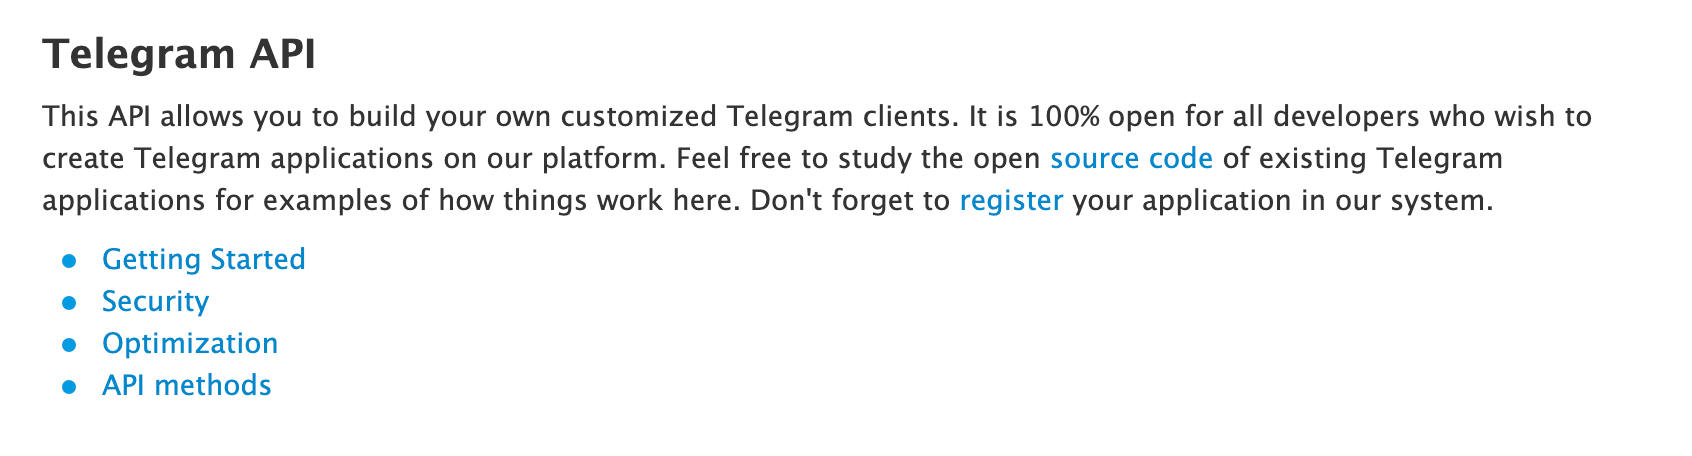 using telegram API to create captivating and dynamic user experiences